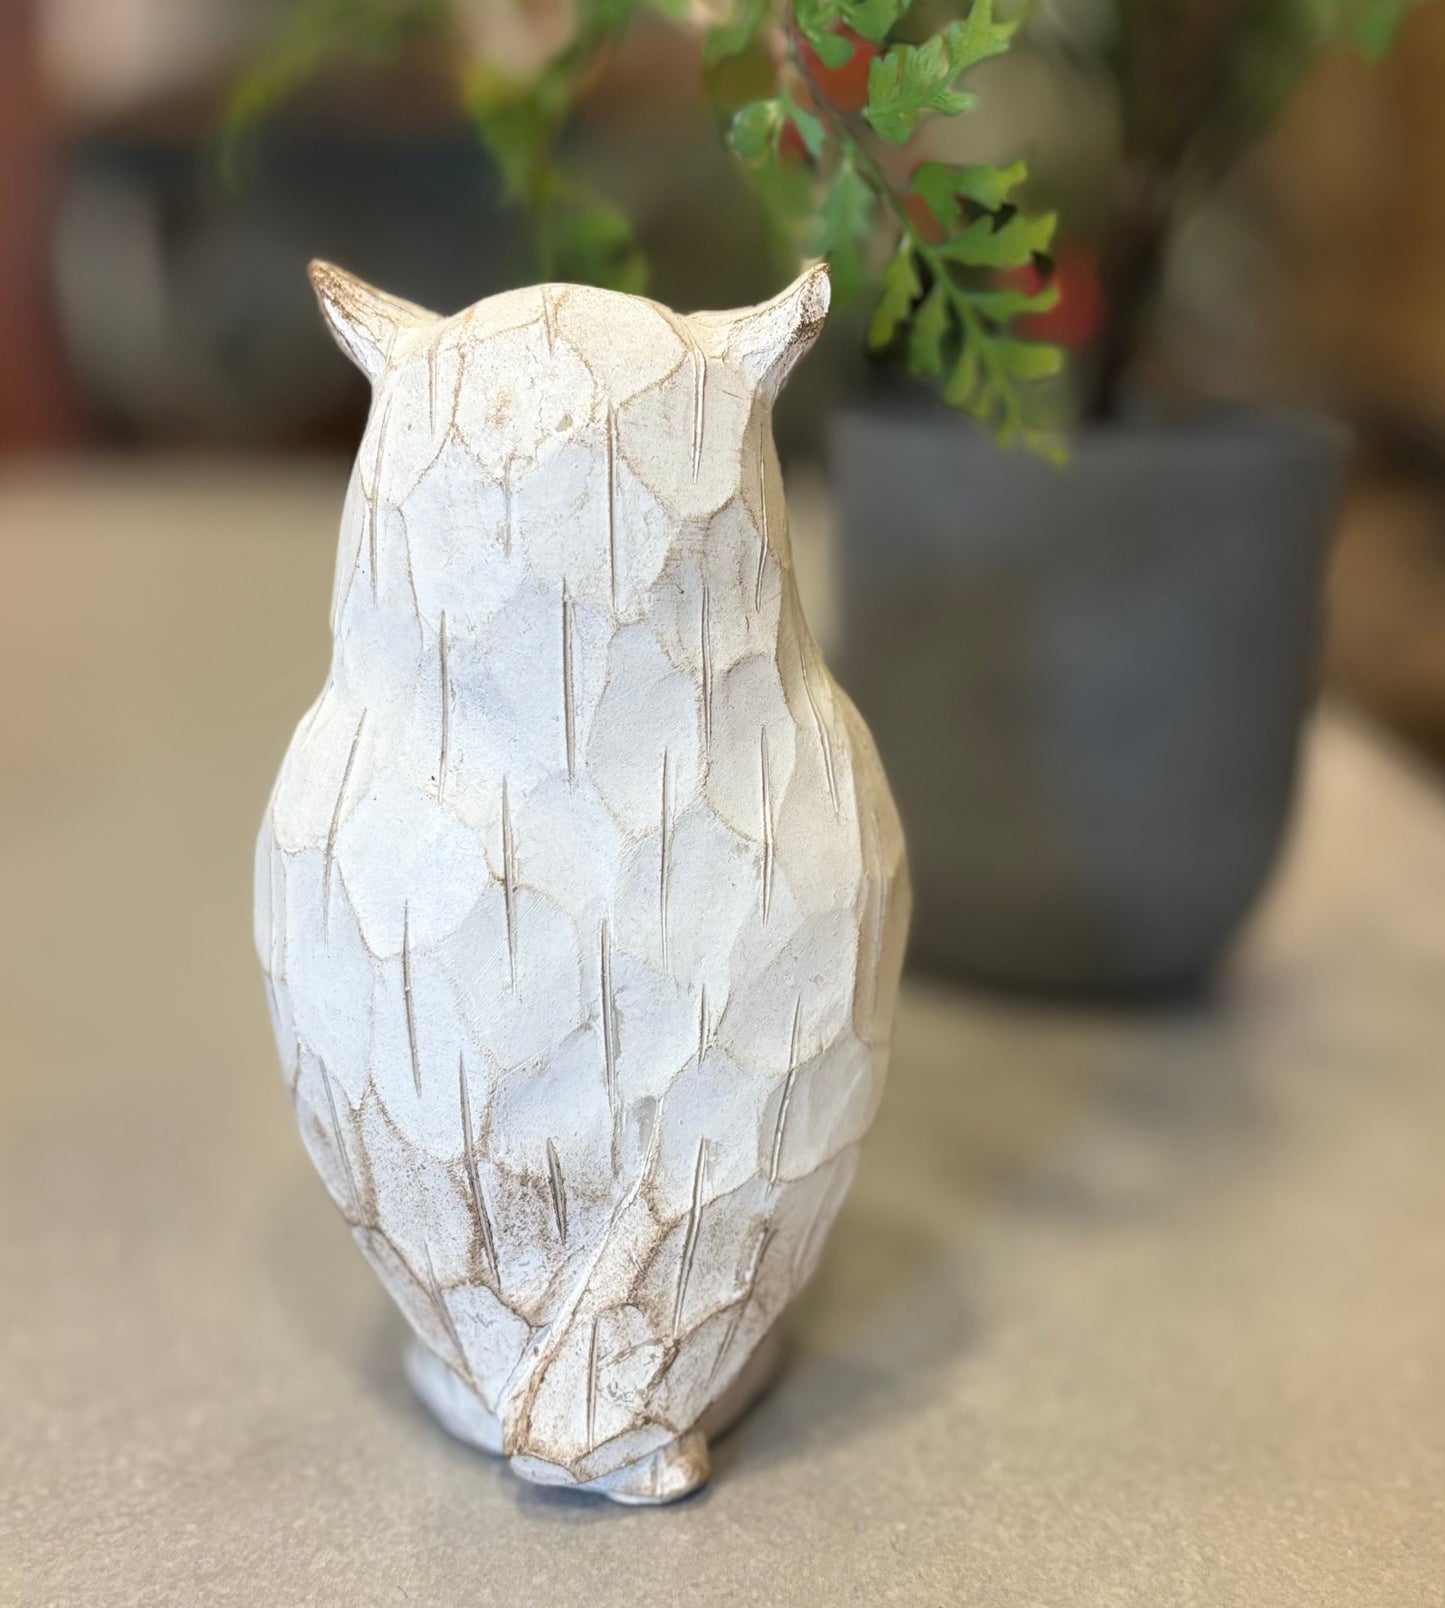 Mini White Owl Sculpture